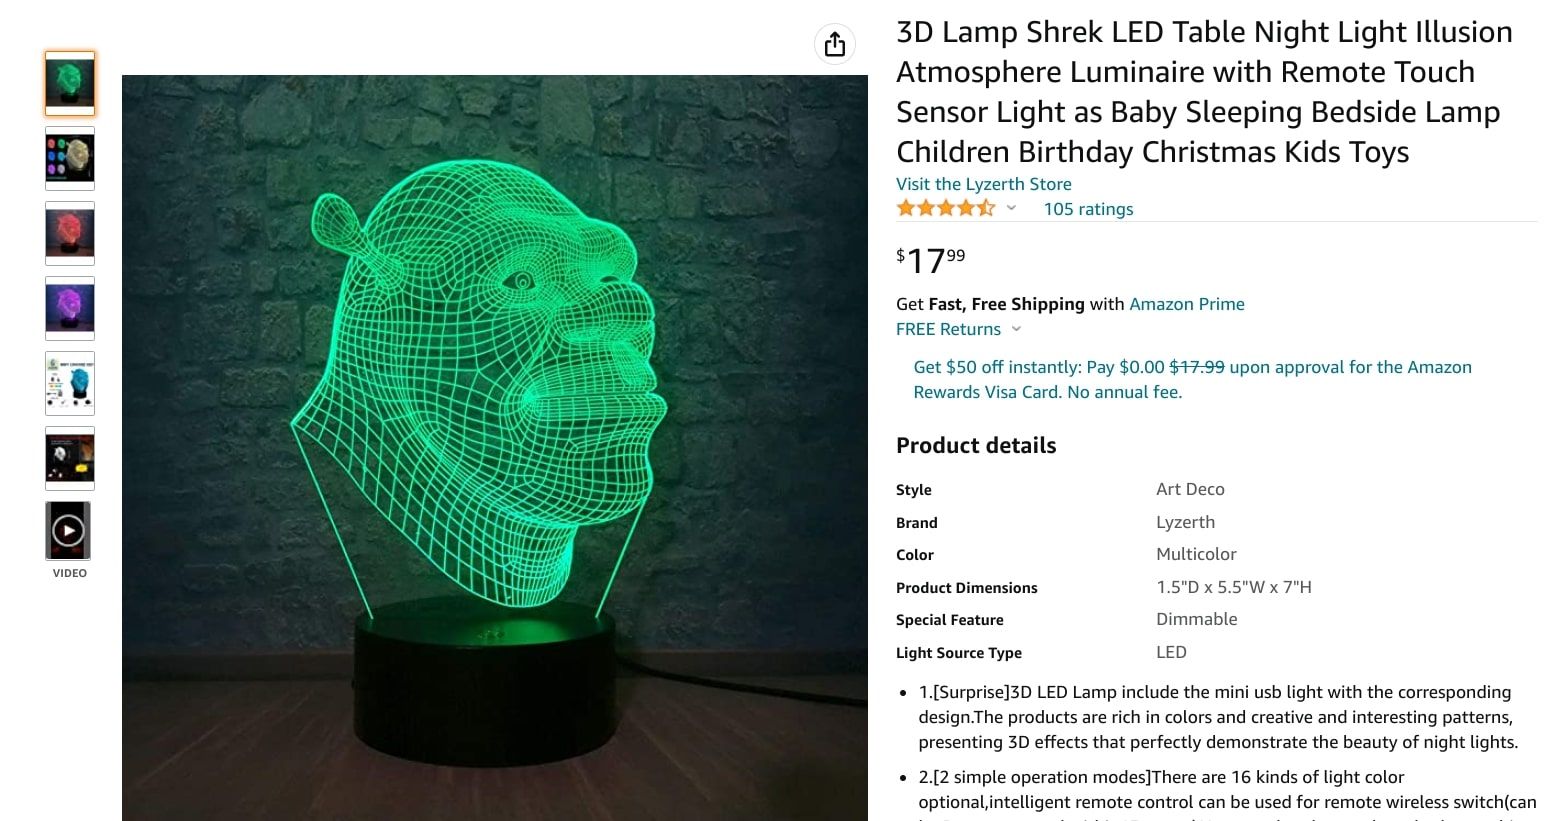 amazon shrek lamp product page screenshot